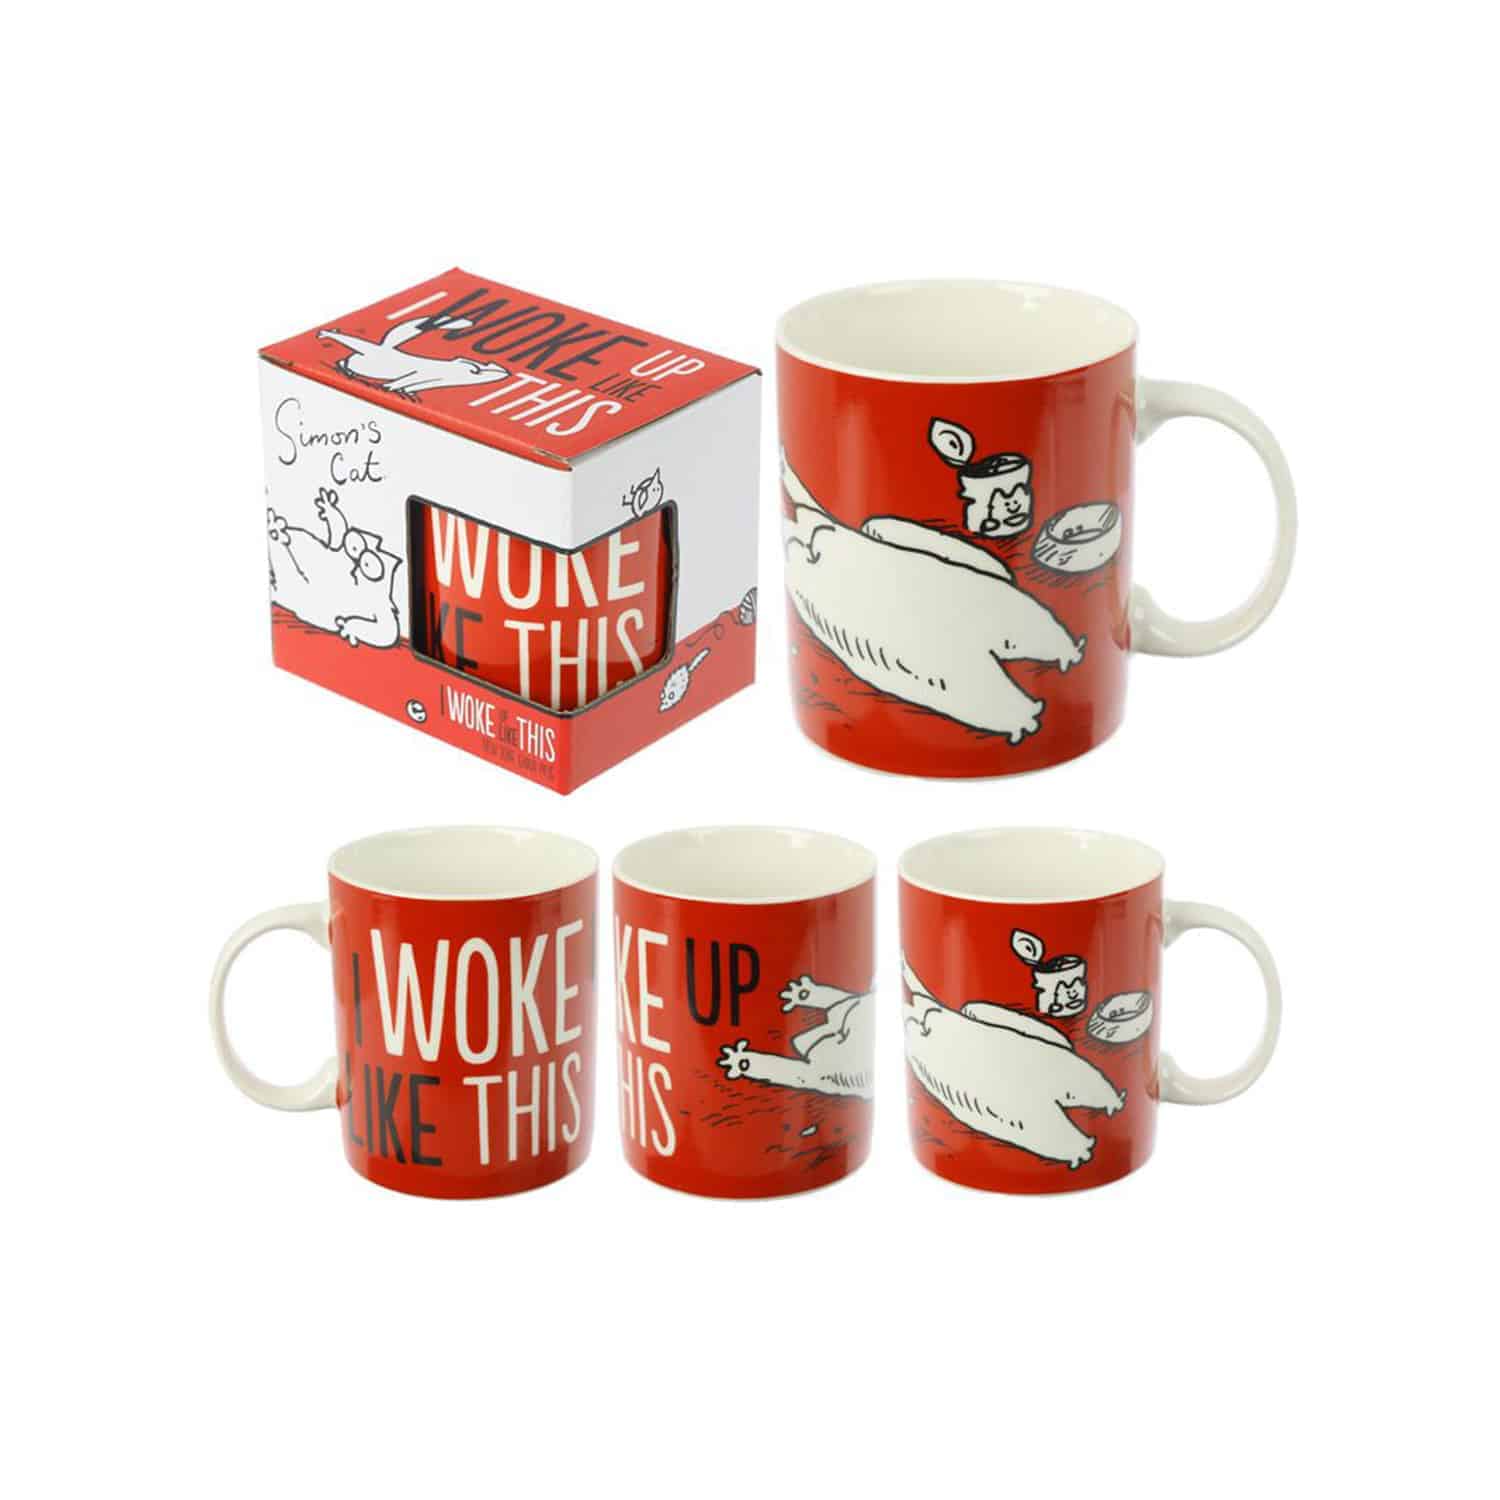 simons-cat-woke-up-like-this-mug